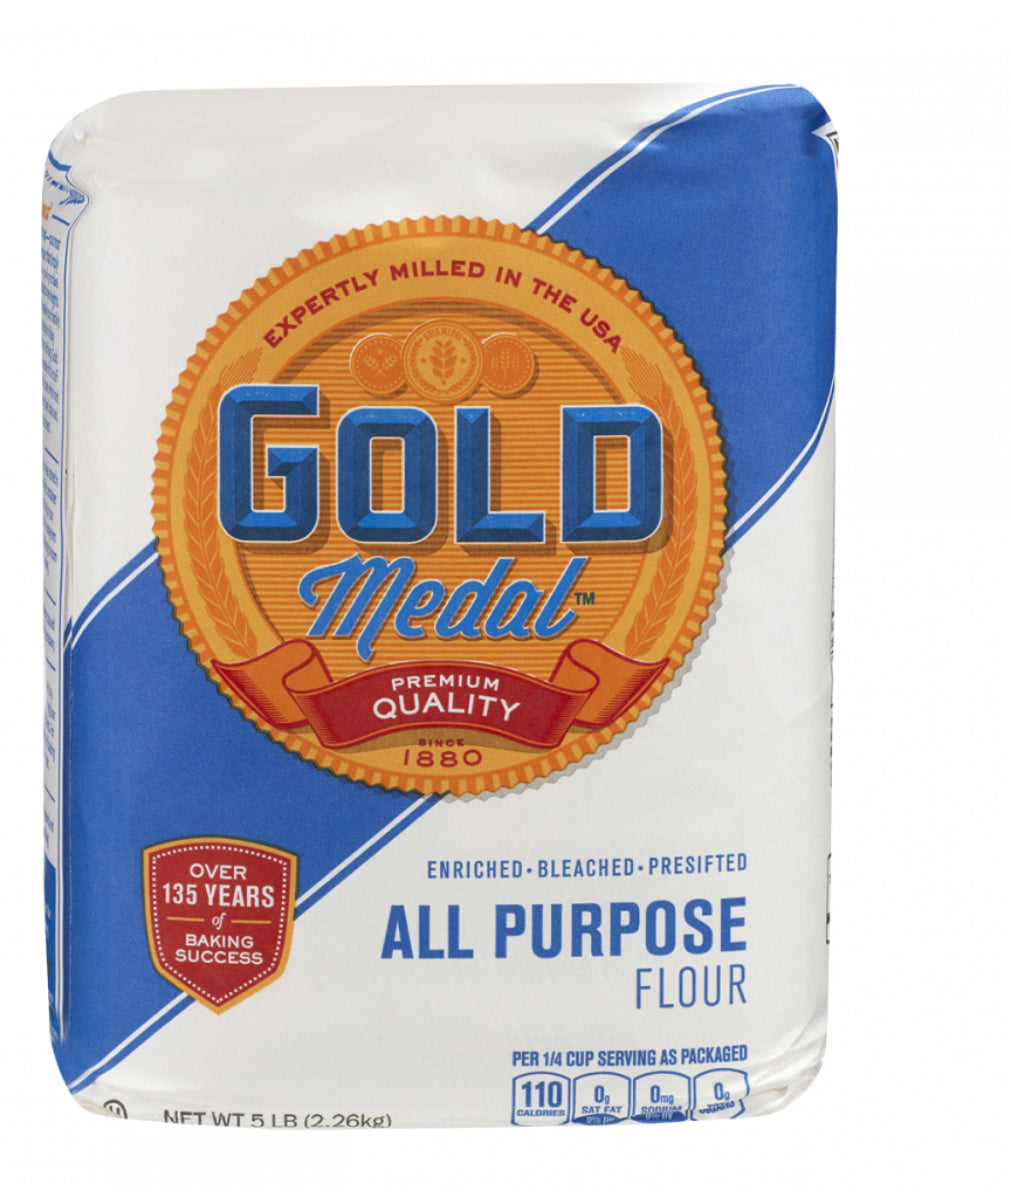 Gold Medal All Purpose Flour 5LB